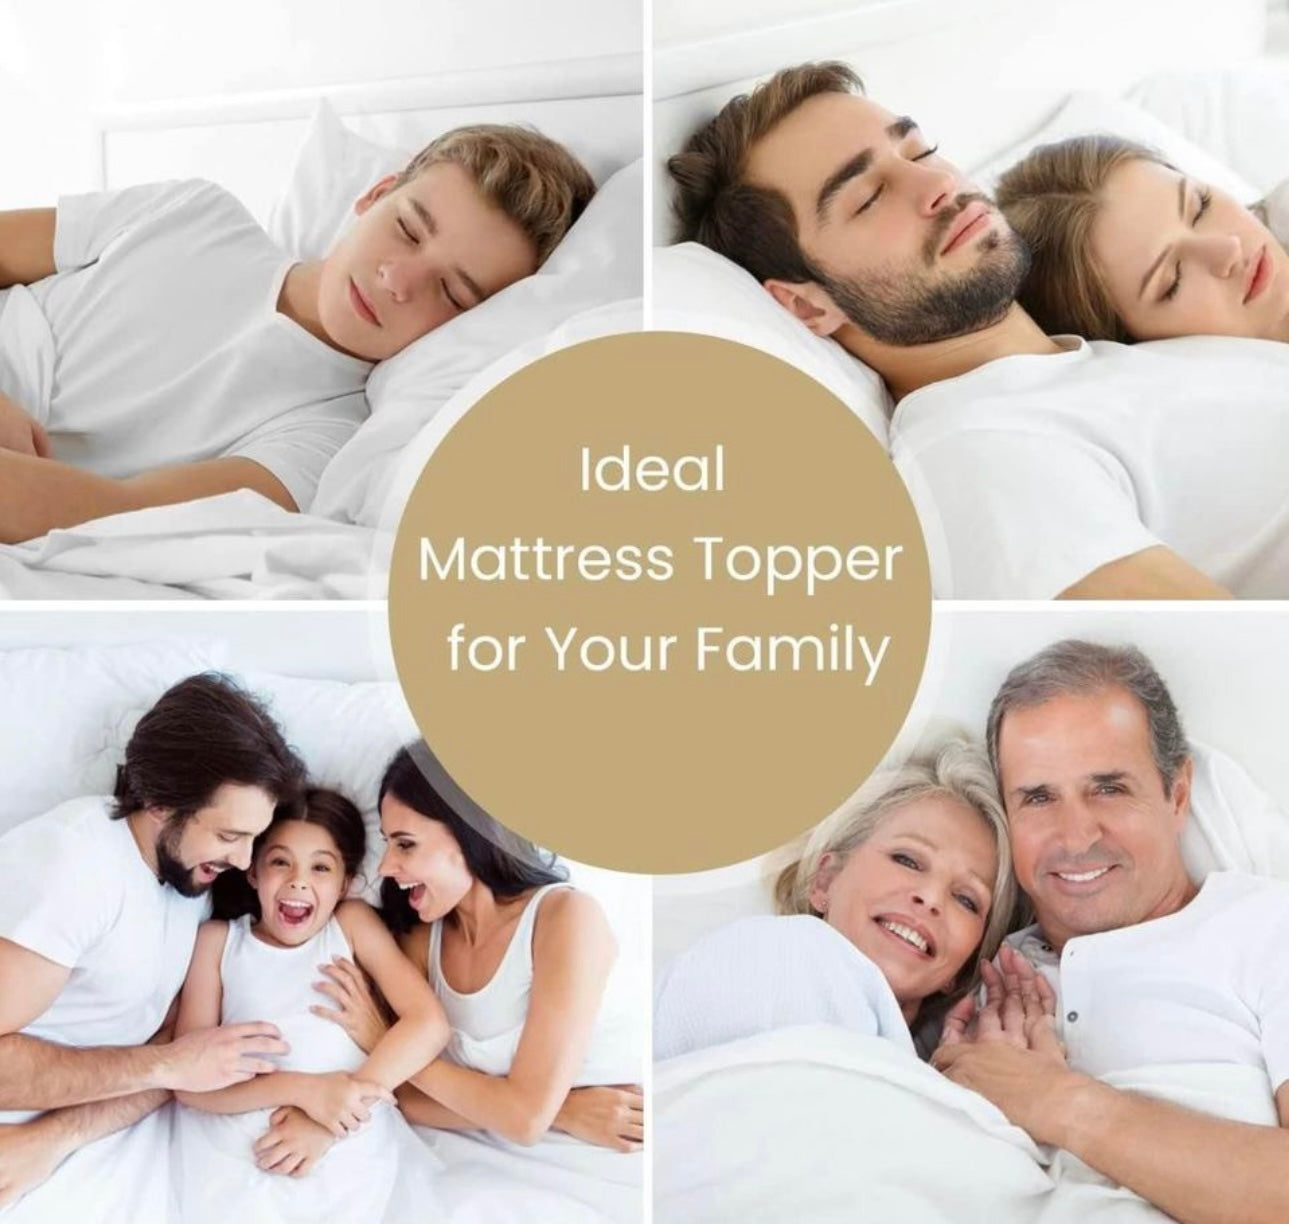 Mattress Topper,Down Alternative Soft Fiber Breathable Hotel Quality.